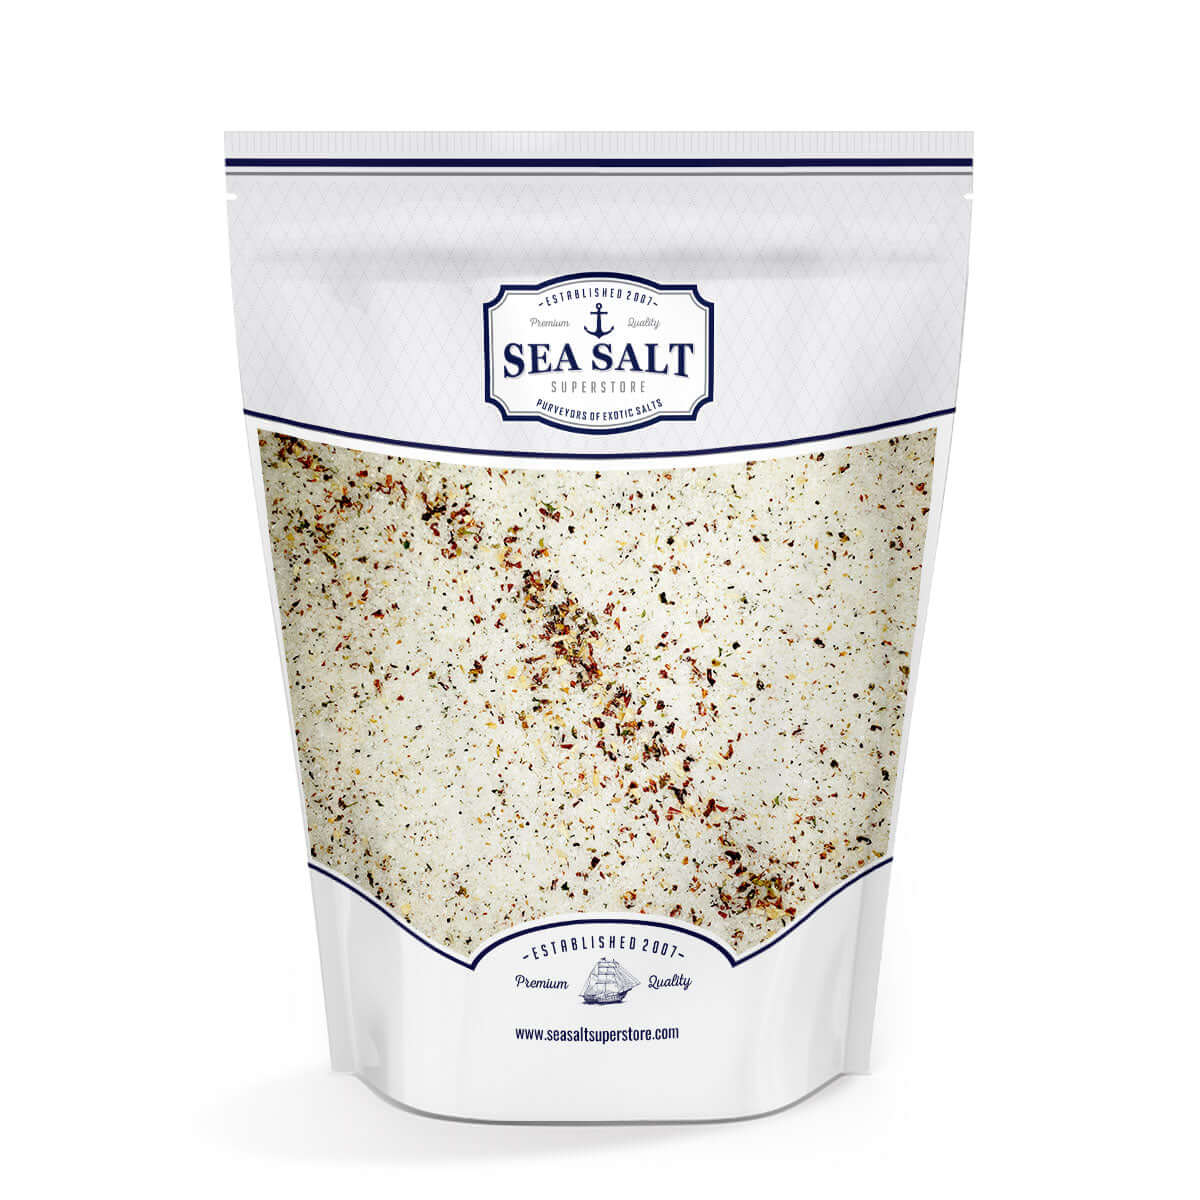 Garlic Medley Sea Salt by Sea Salt Superstore - 40 lbs Finishing Salts